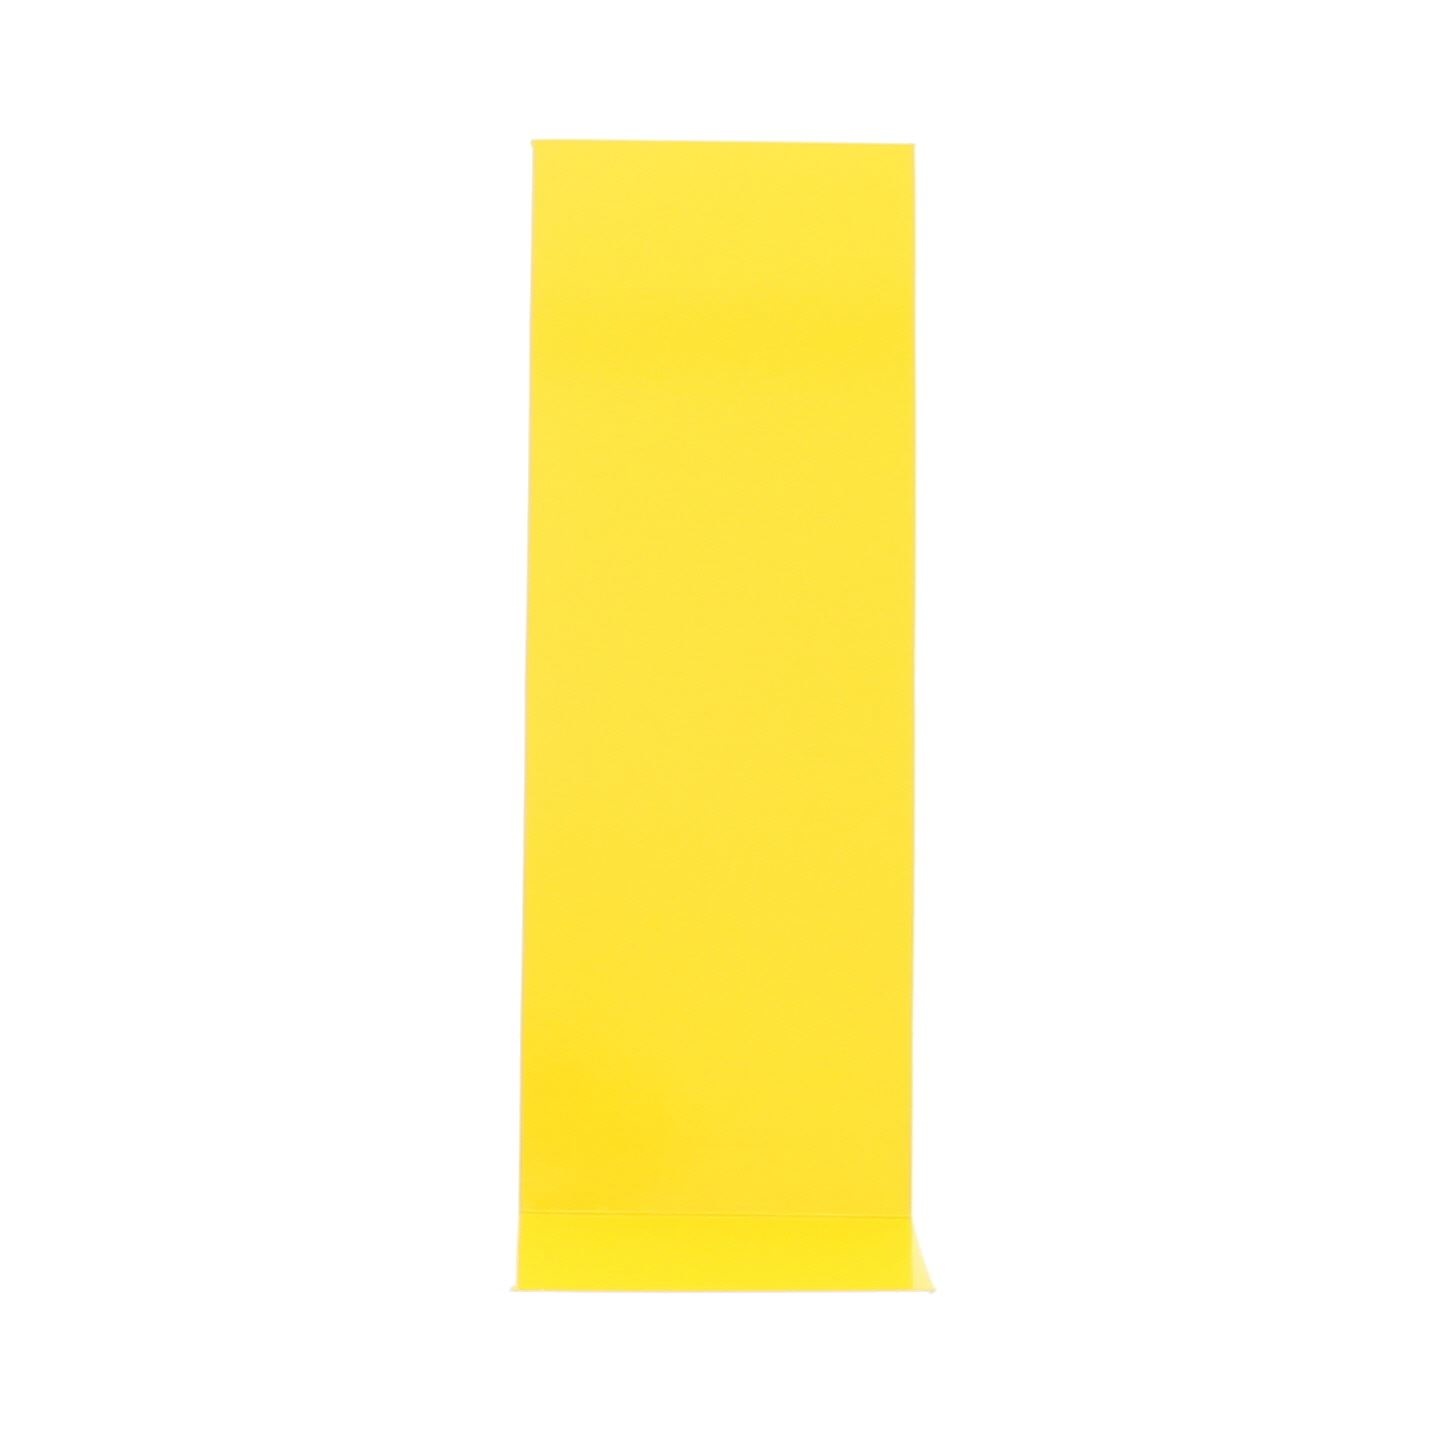 J-Cardboard - Yellow - 77*50*215mm  - 100 pieces